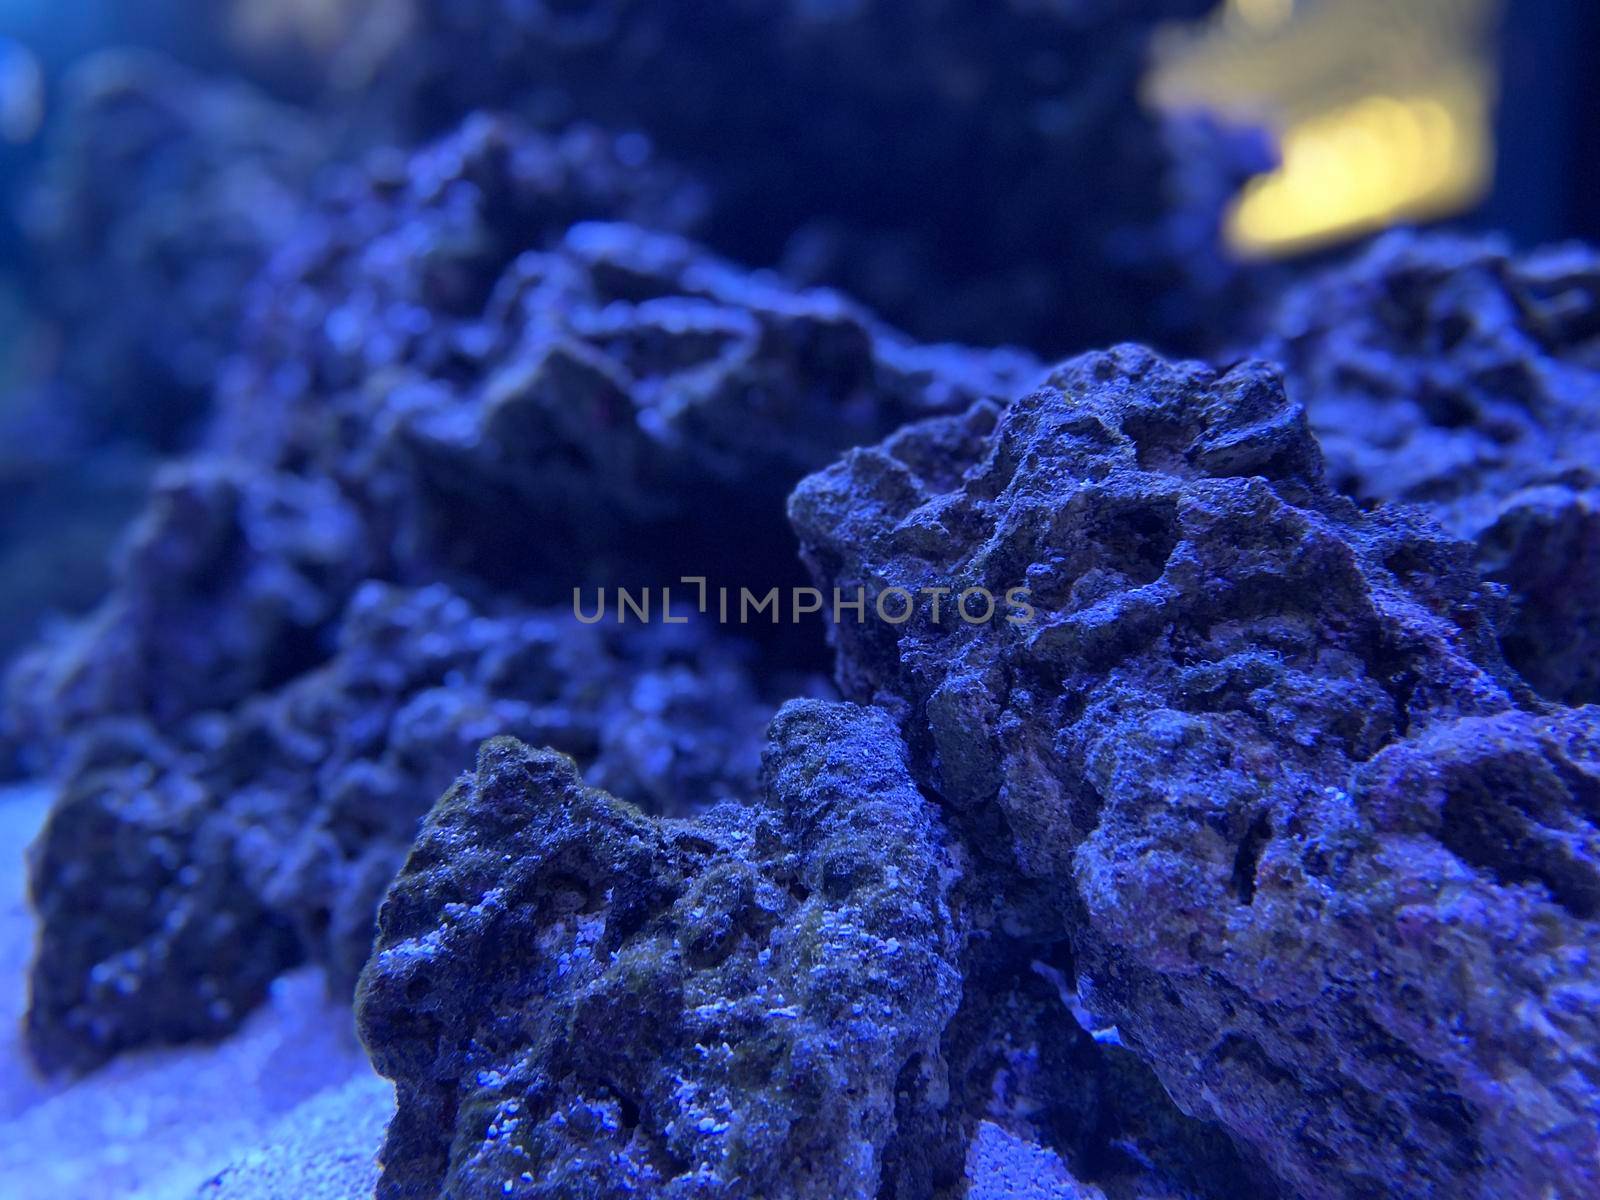 Underwater landscape stone in classic blue color.